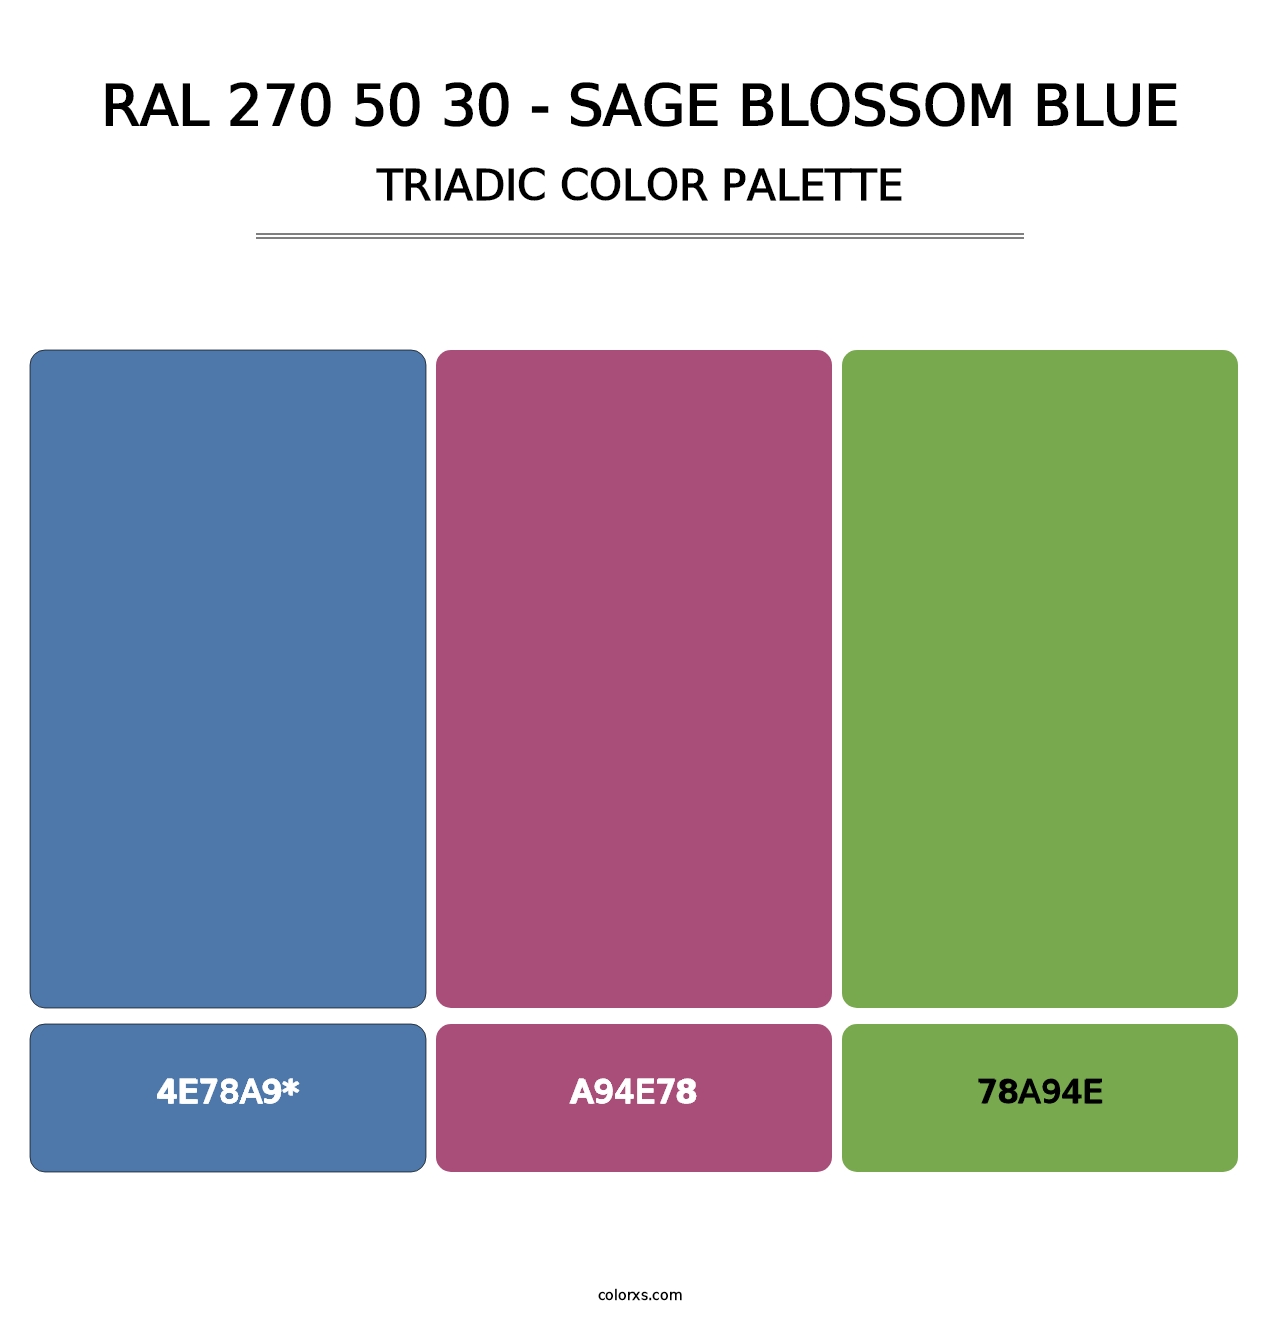 RAL 270 50 30 - Sage Blossom Blue - Triadic Color Palette